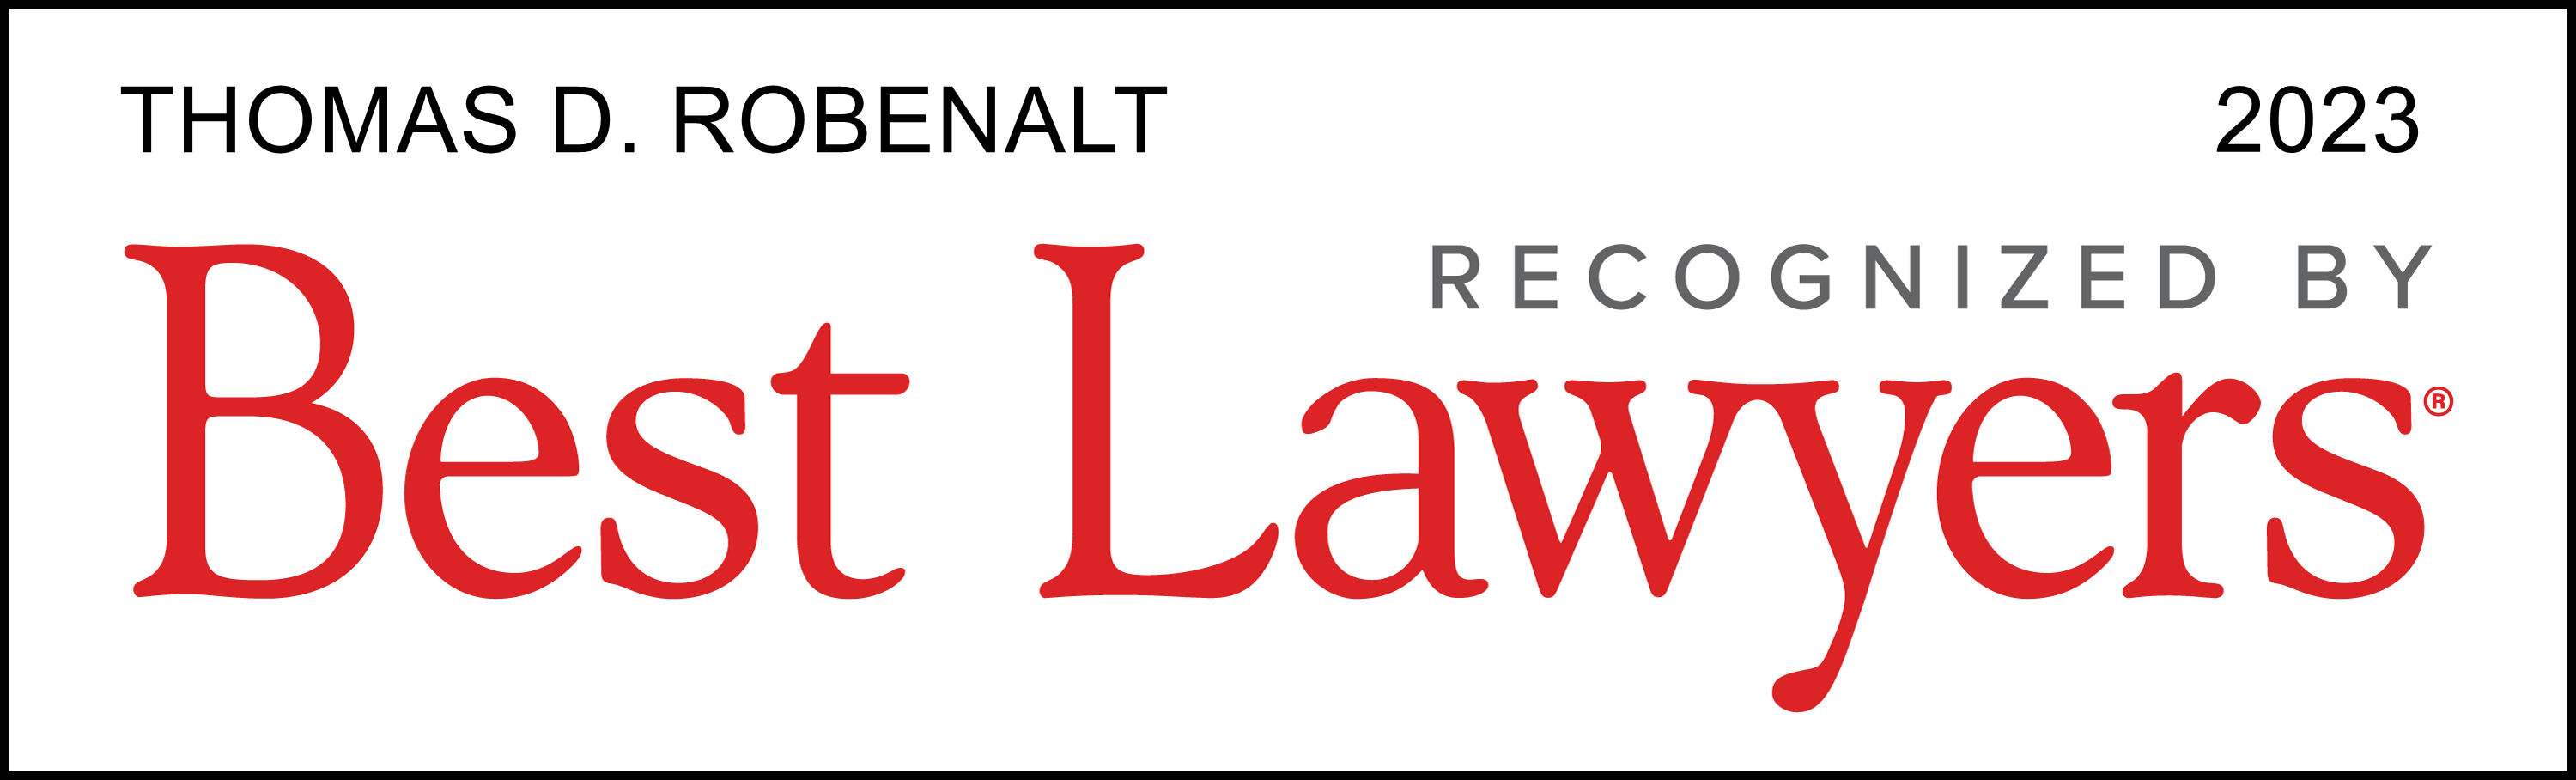 Thomas D. Robenalt | 2023 | Recognized By Best Lawyers